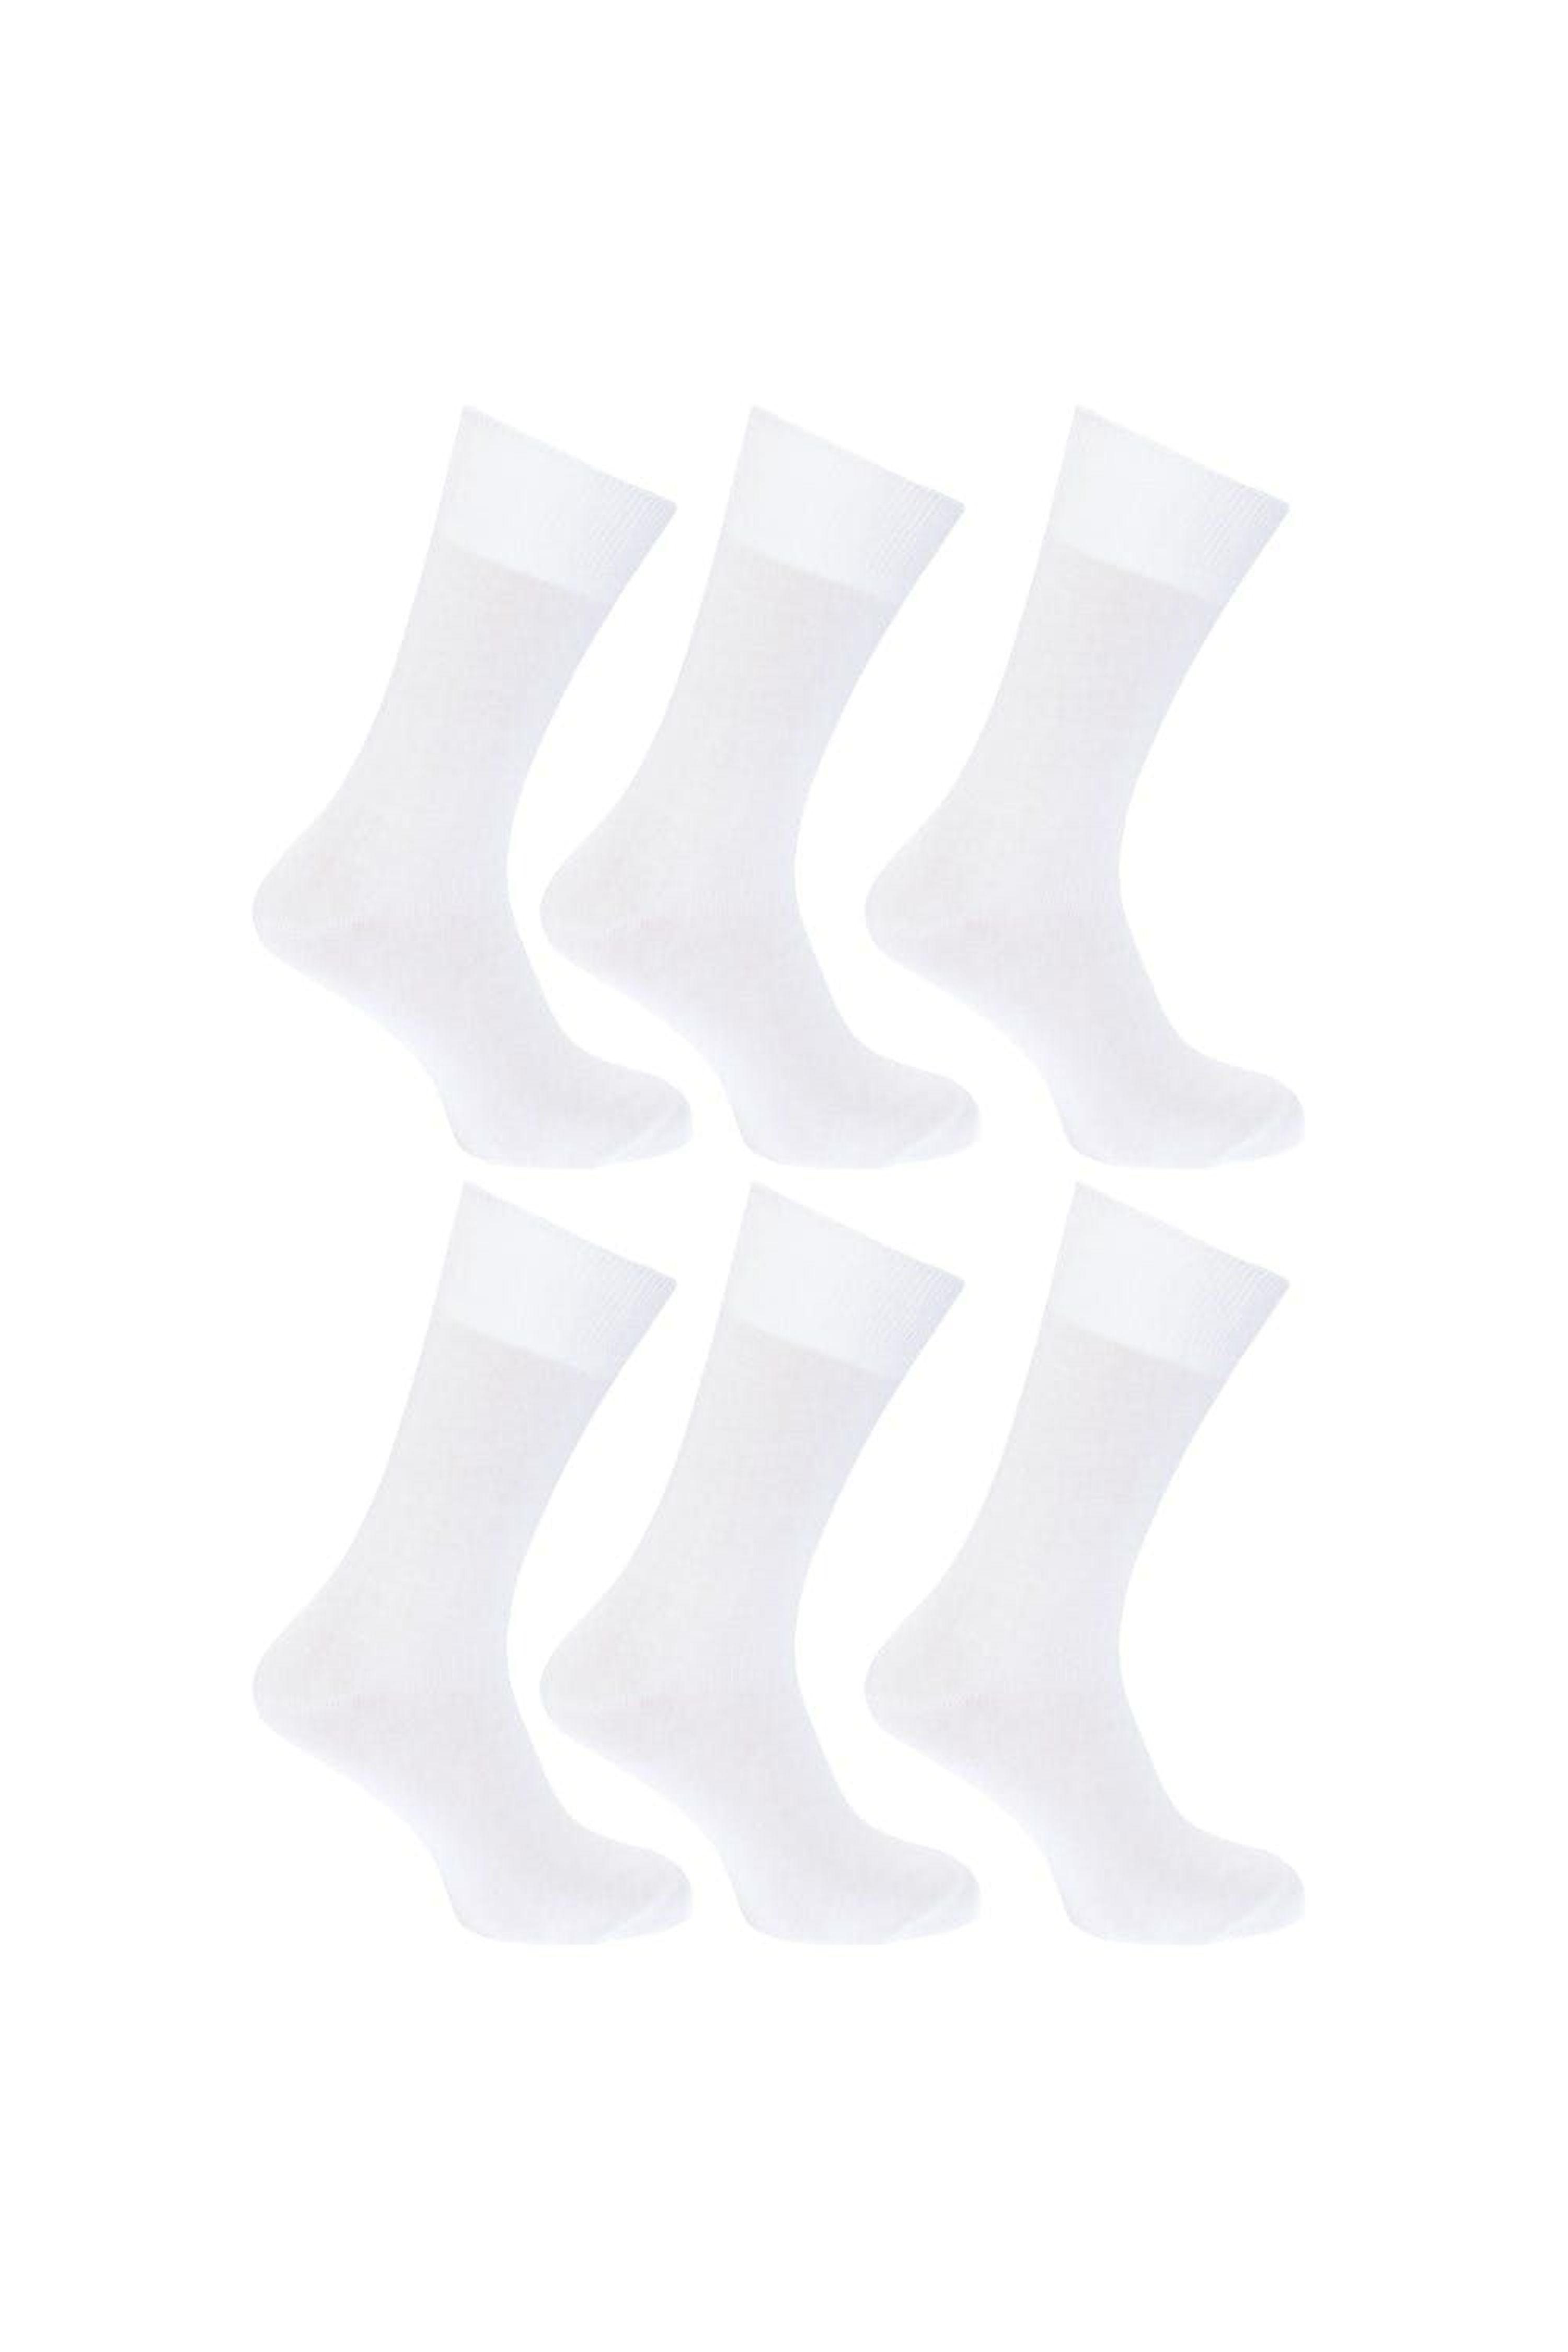 floso Plain 100% Cotton Socks in White | Lyst